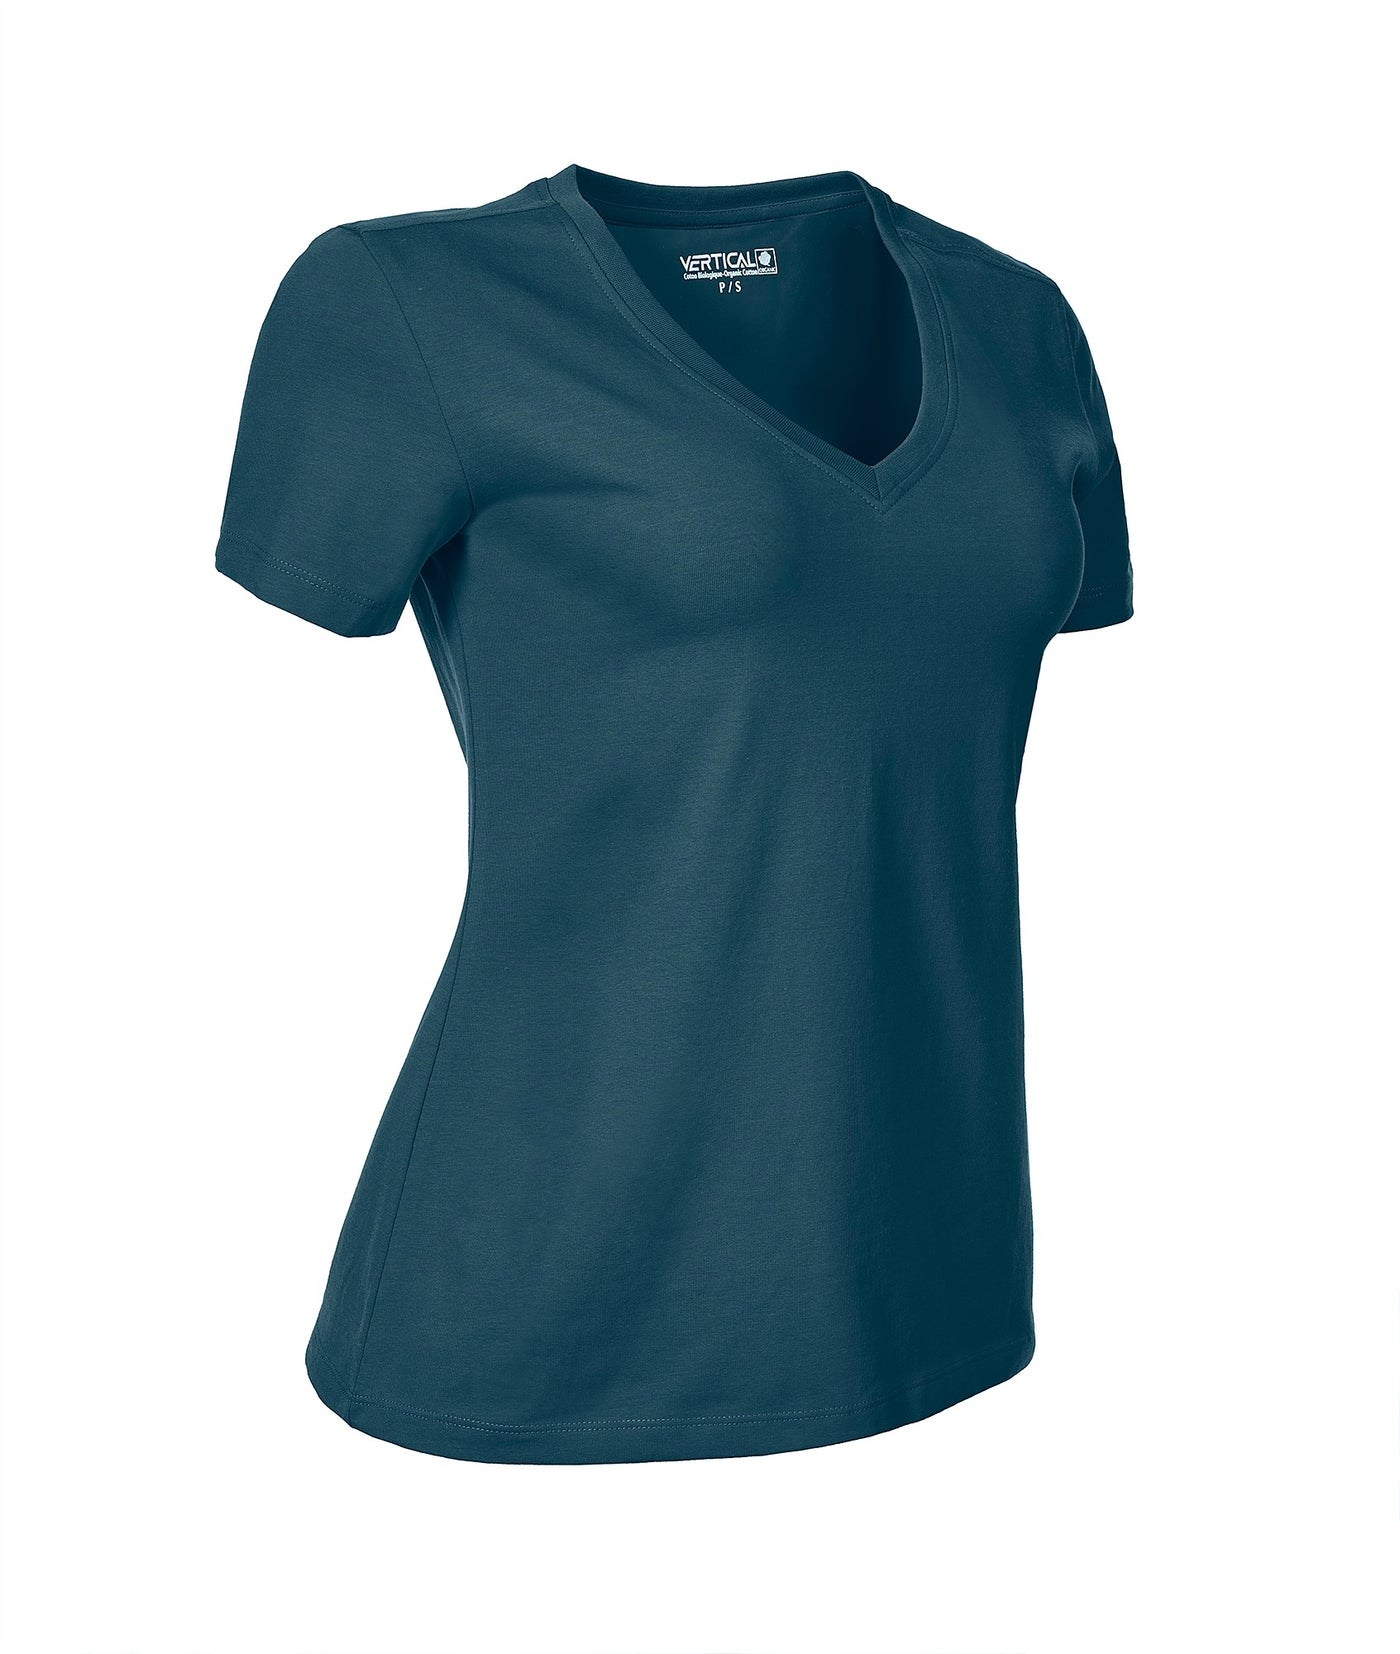 T-Shirt le V - Femme - 60% de rabais